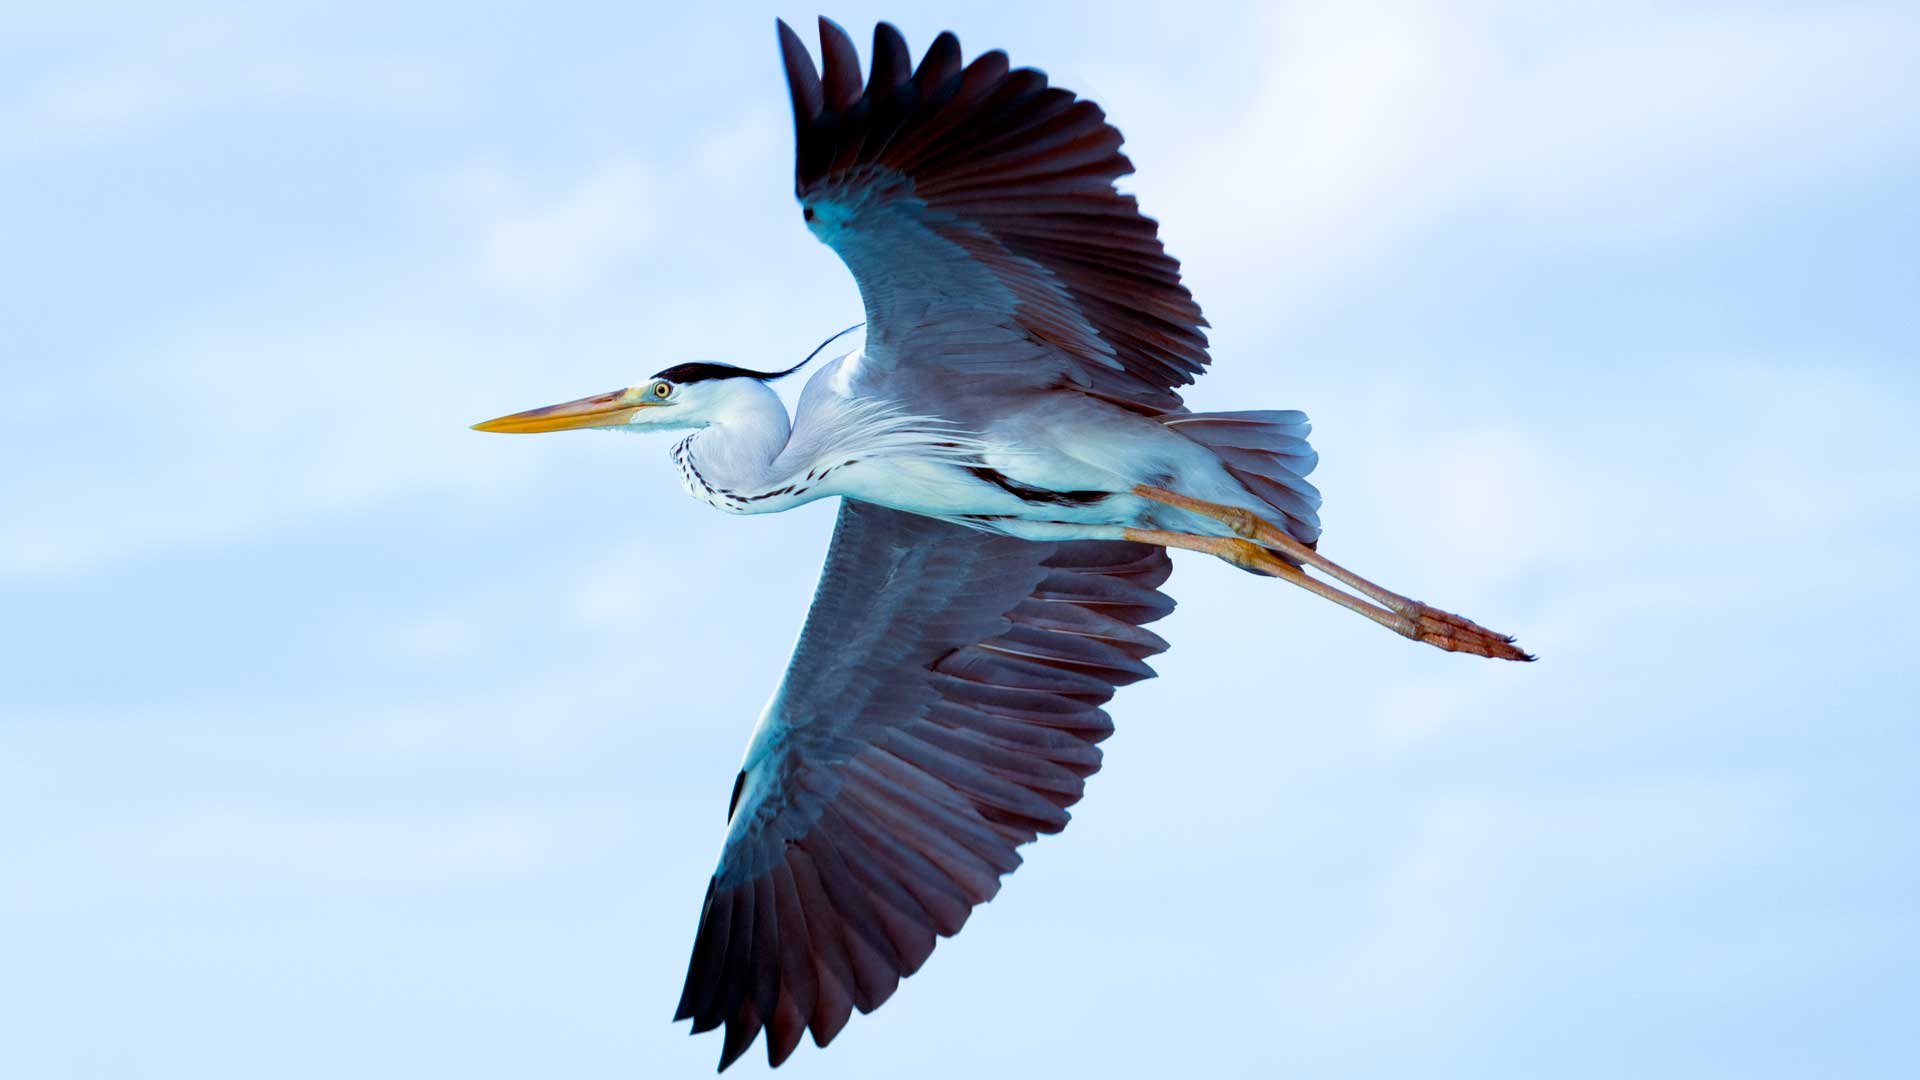 Grey heron in flight